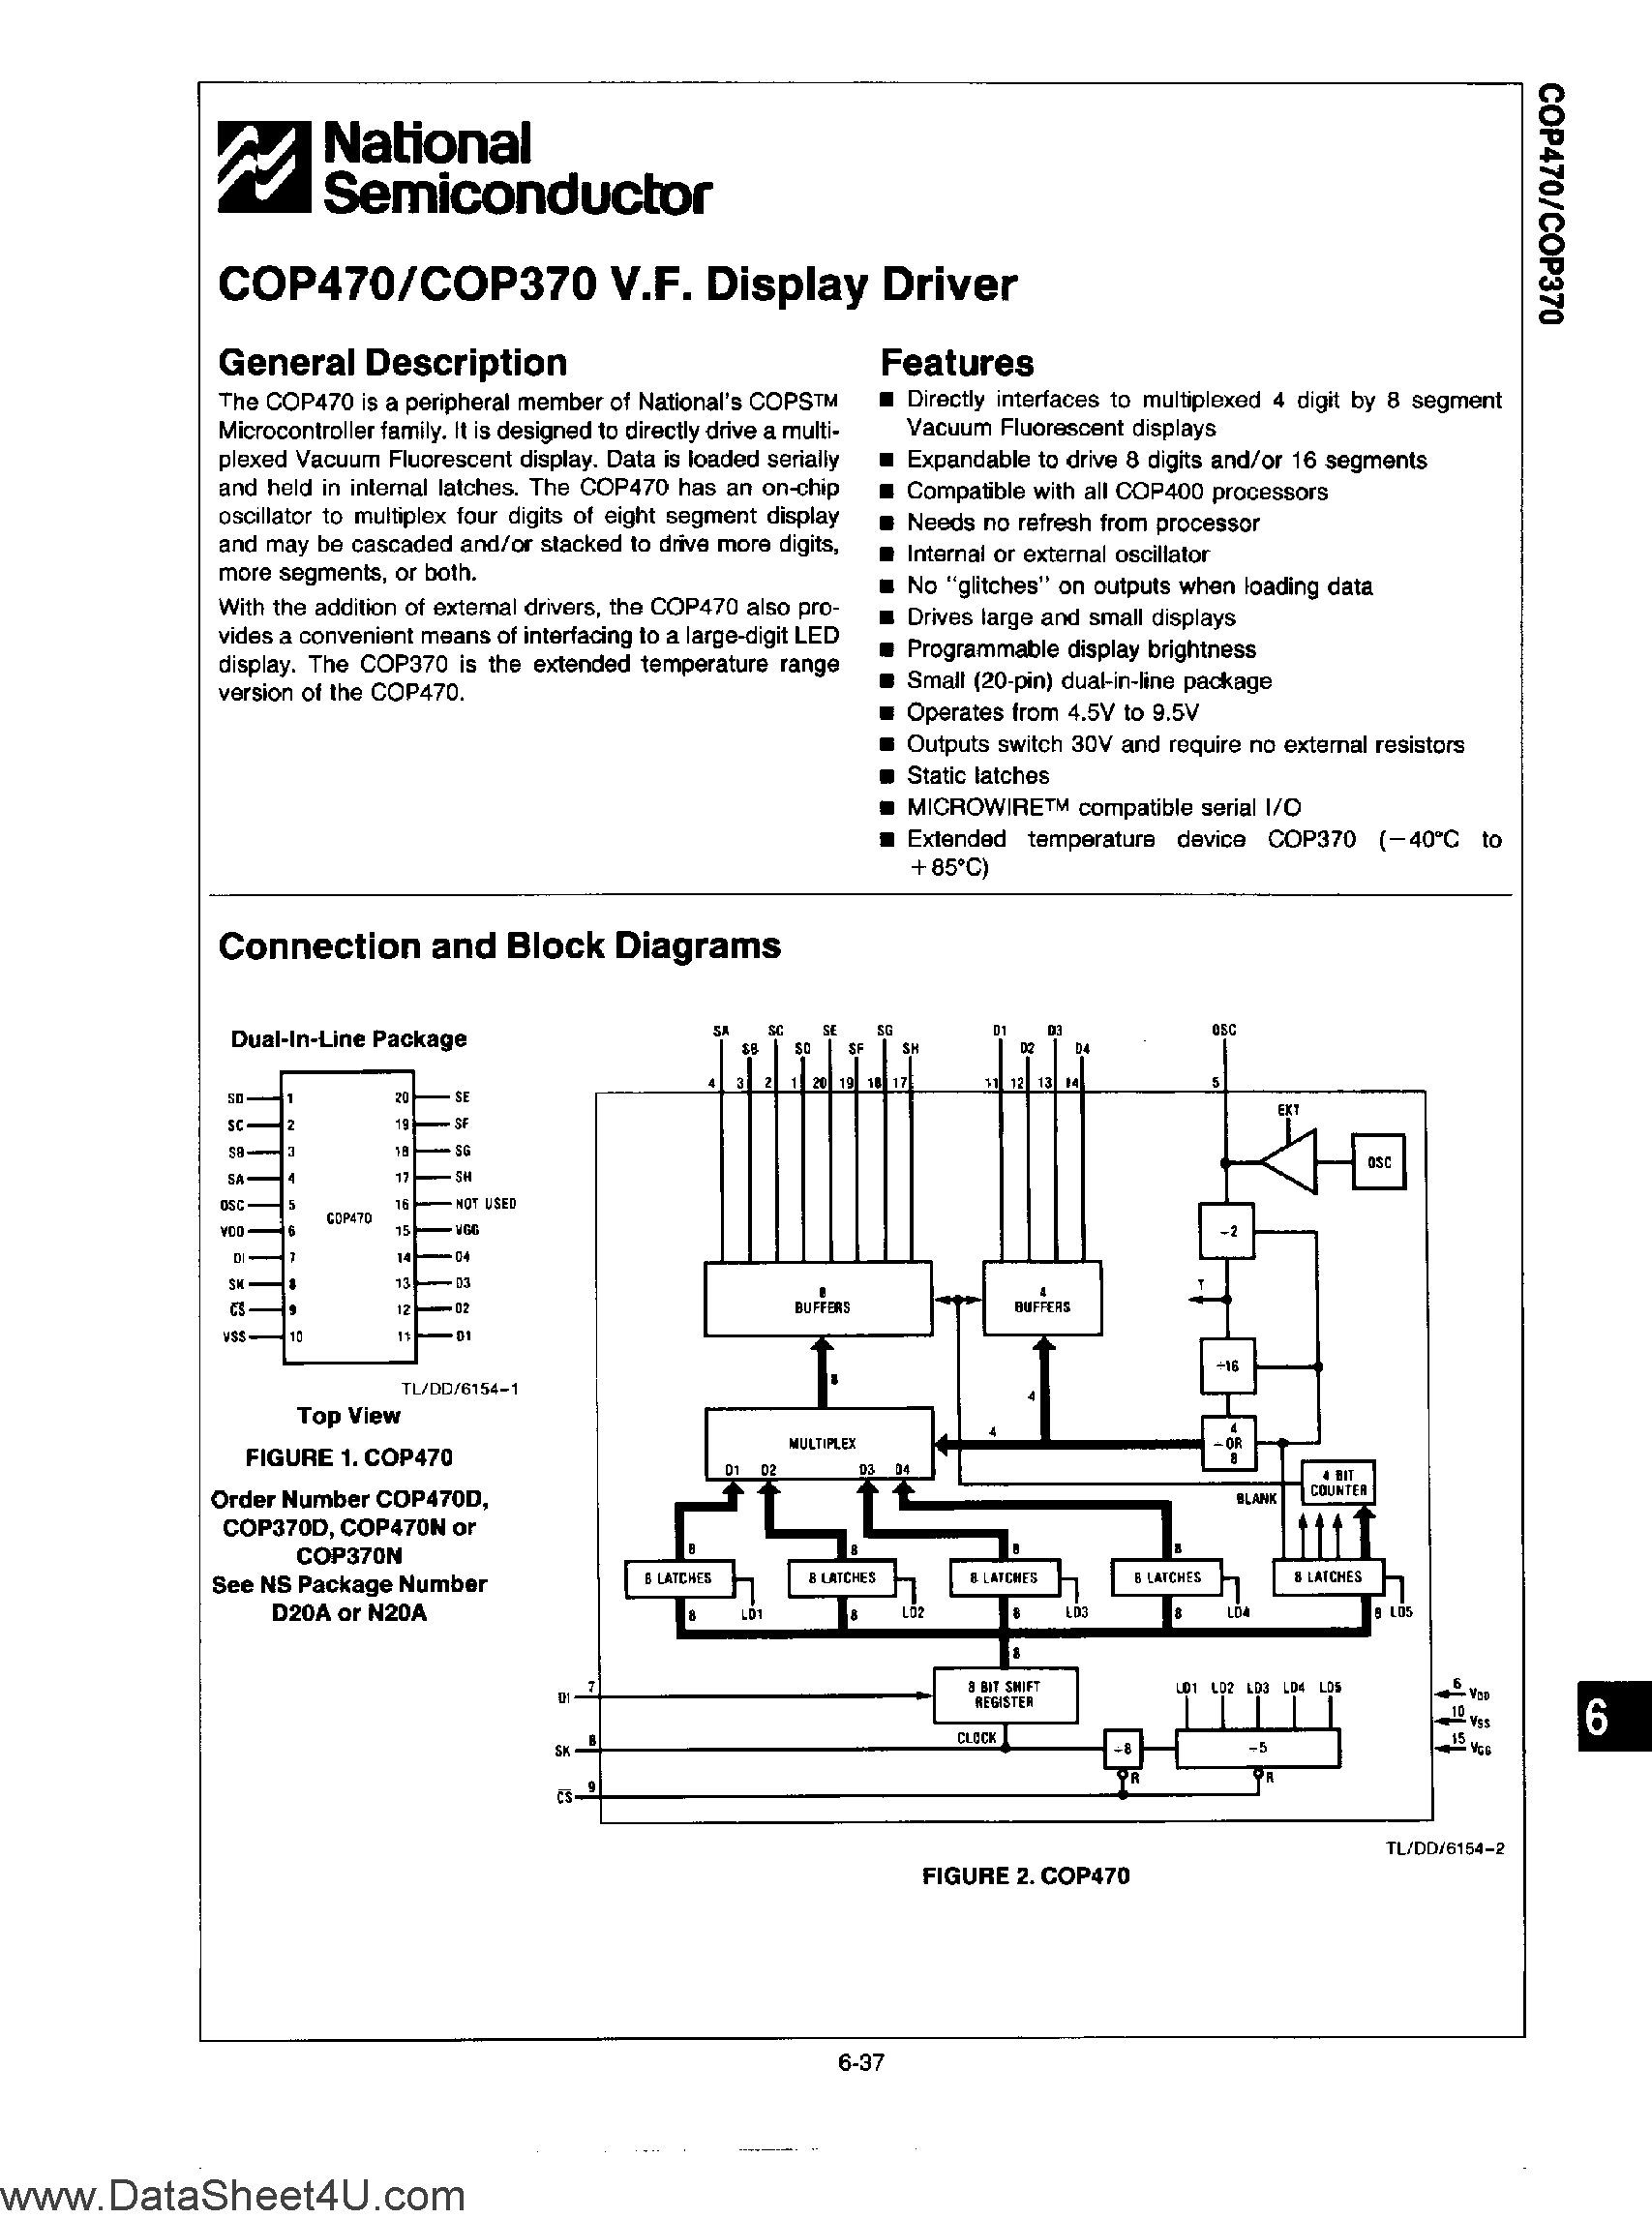 Datasheet COP370 - (COP370 / COP470) V.F. Display Driver page 1